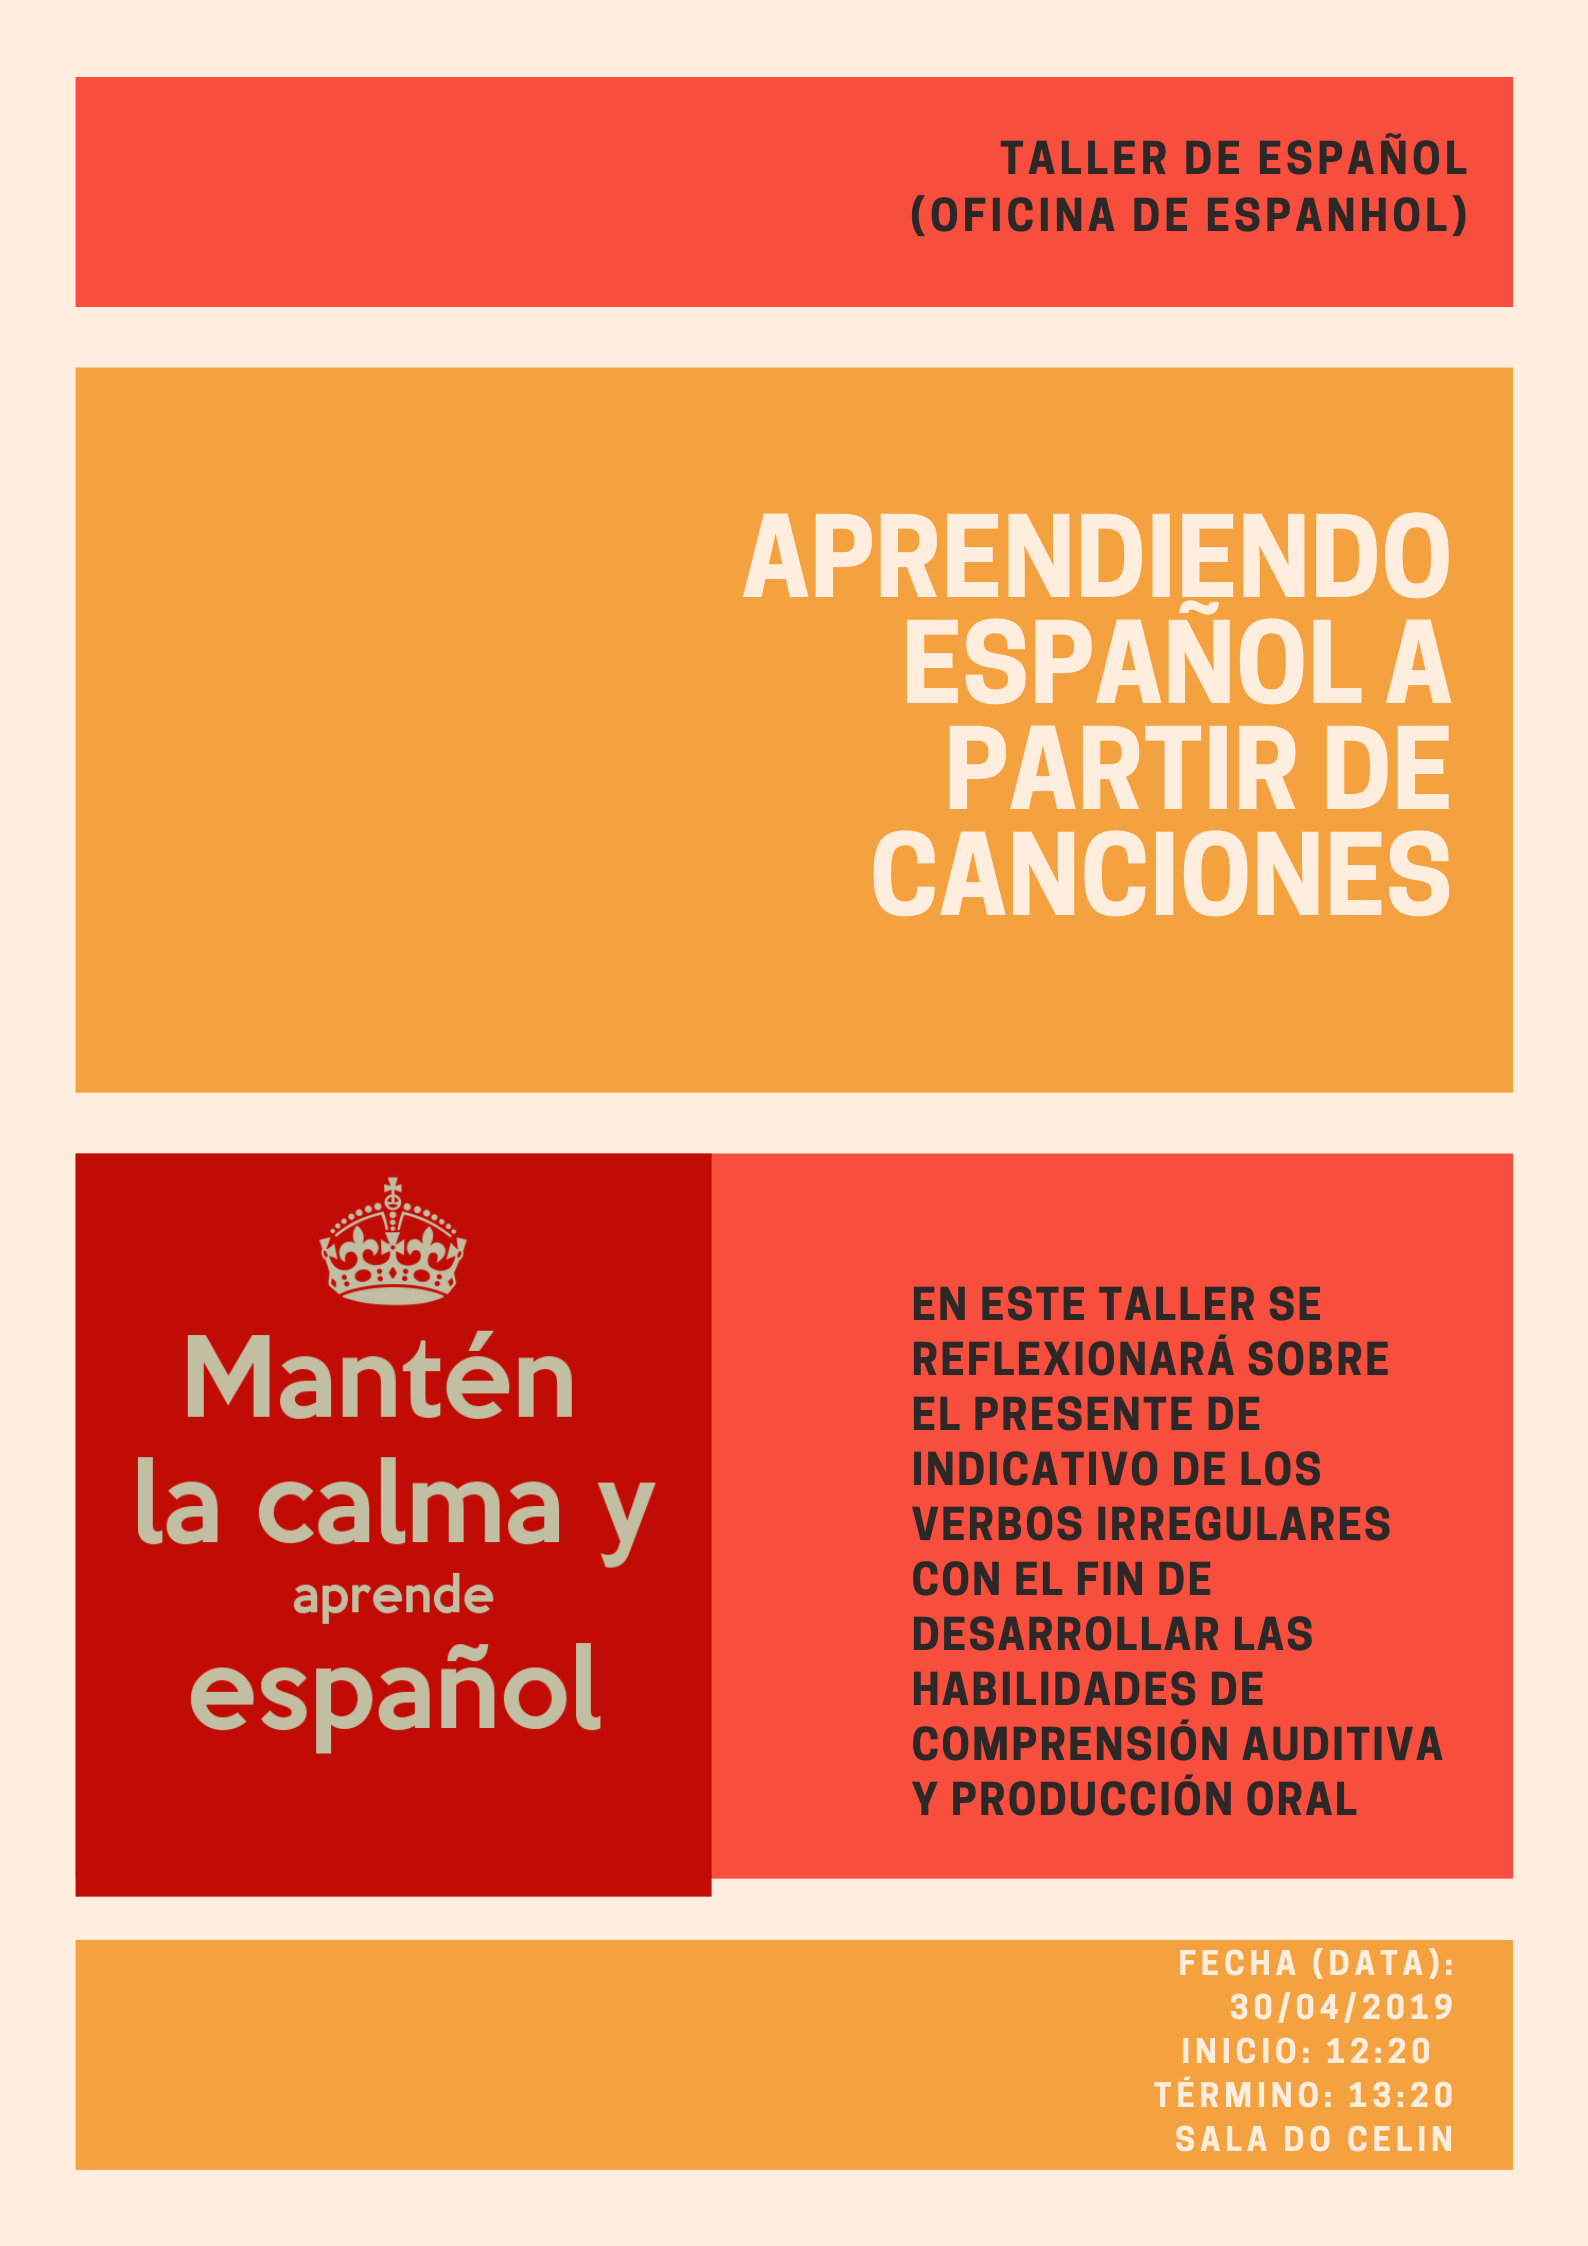 TALLER DE ESPAÑOL Oficina de EspanholT